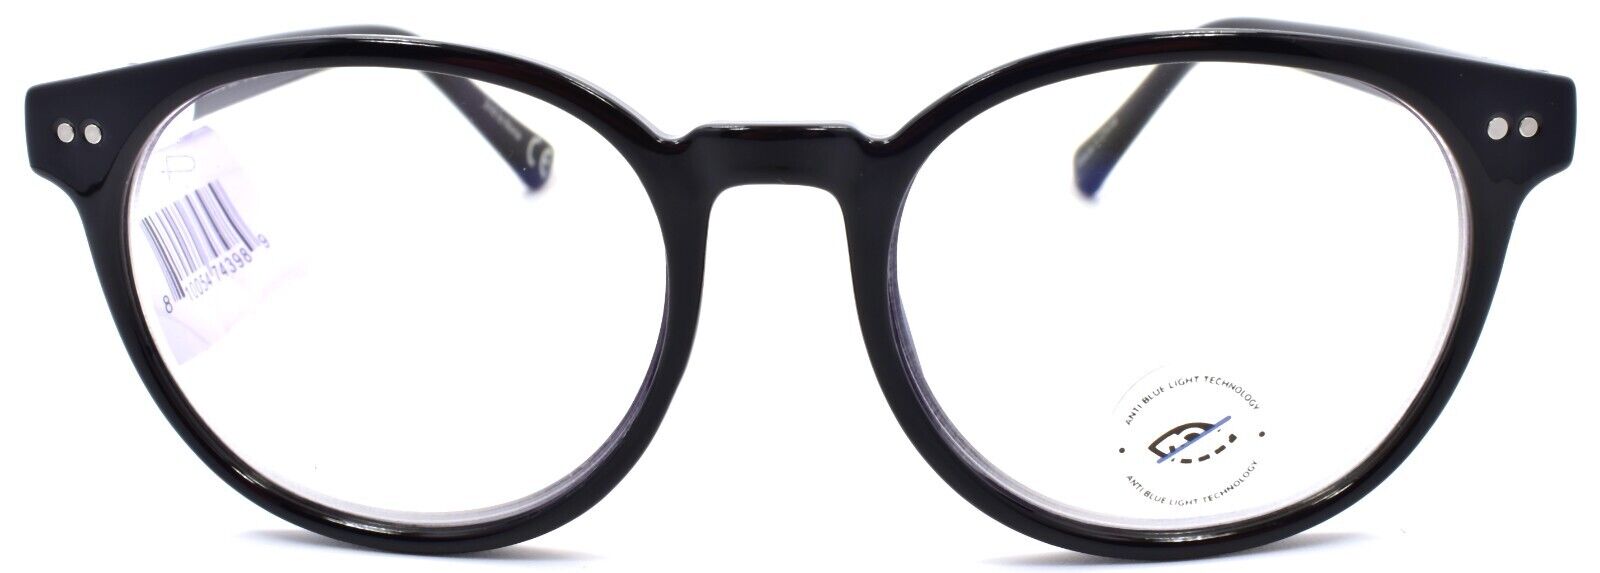 2-Prive Revaux Theodore 807 Eyeglasses Blue Light Blocking RX-ready Black-810054743989-IKSpecs